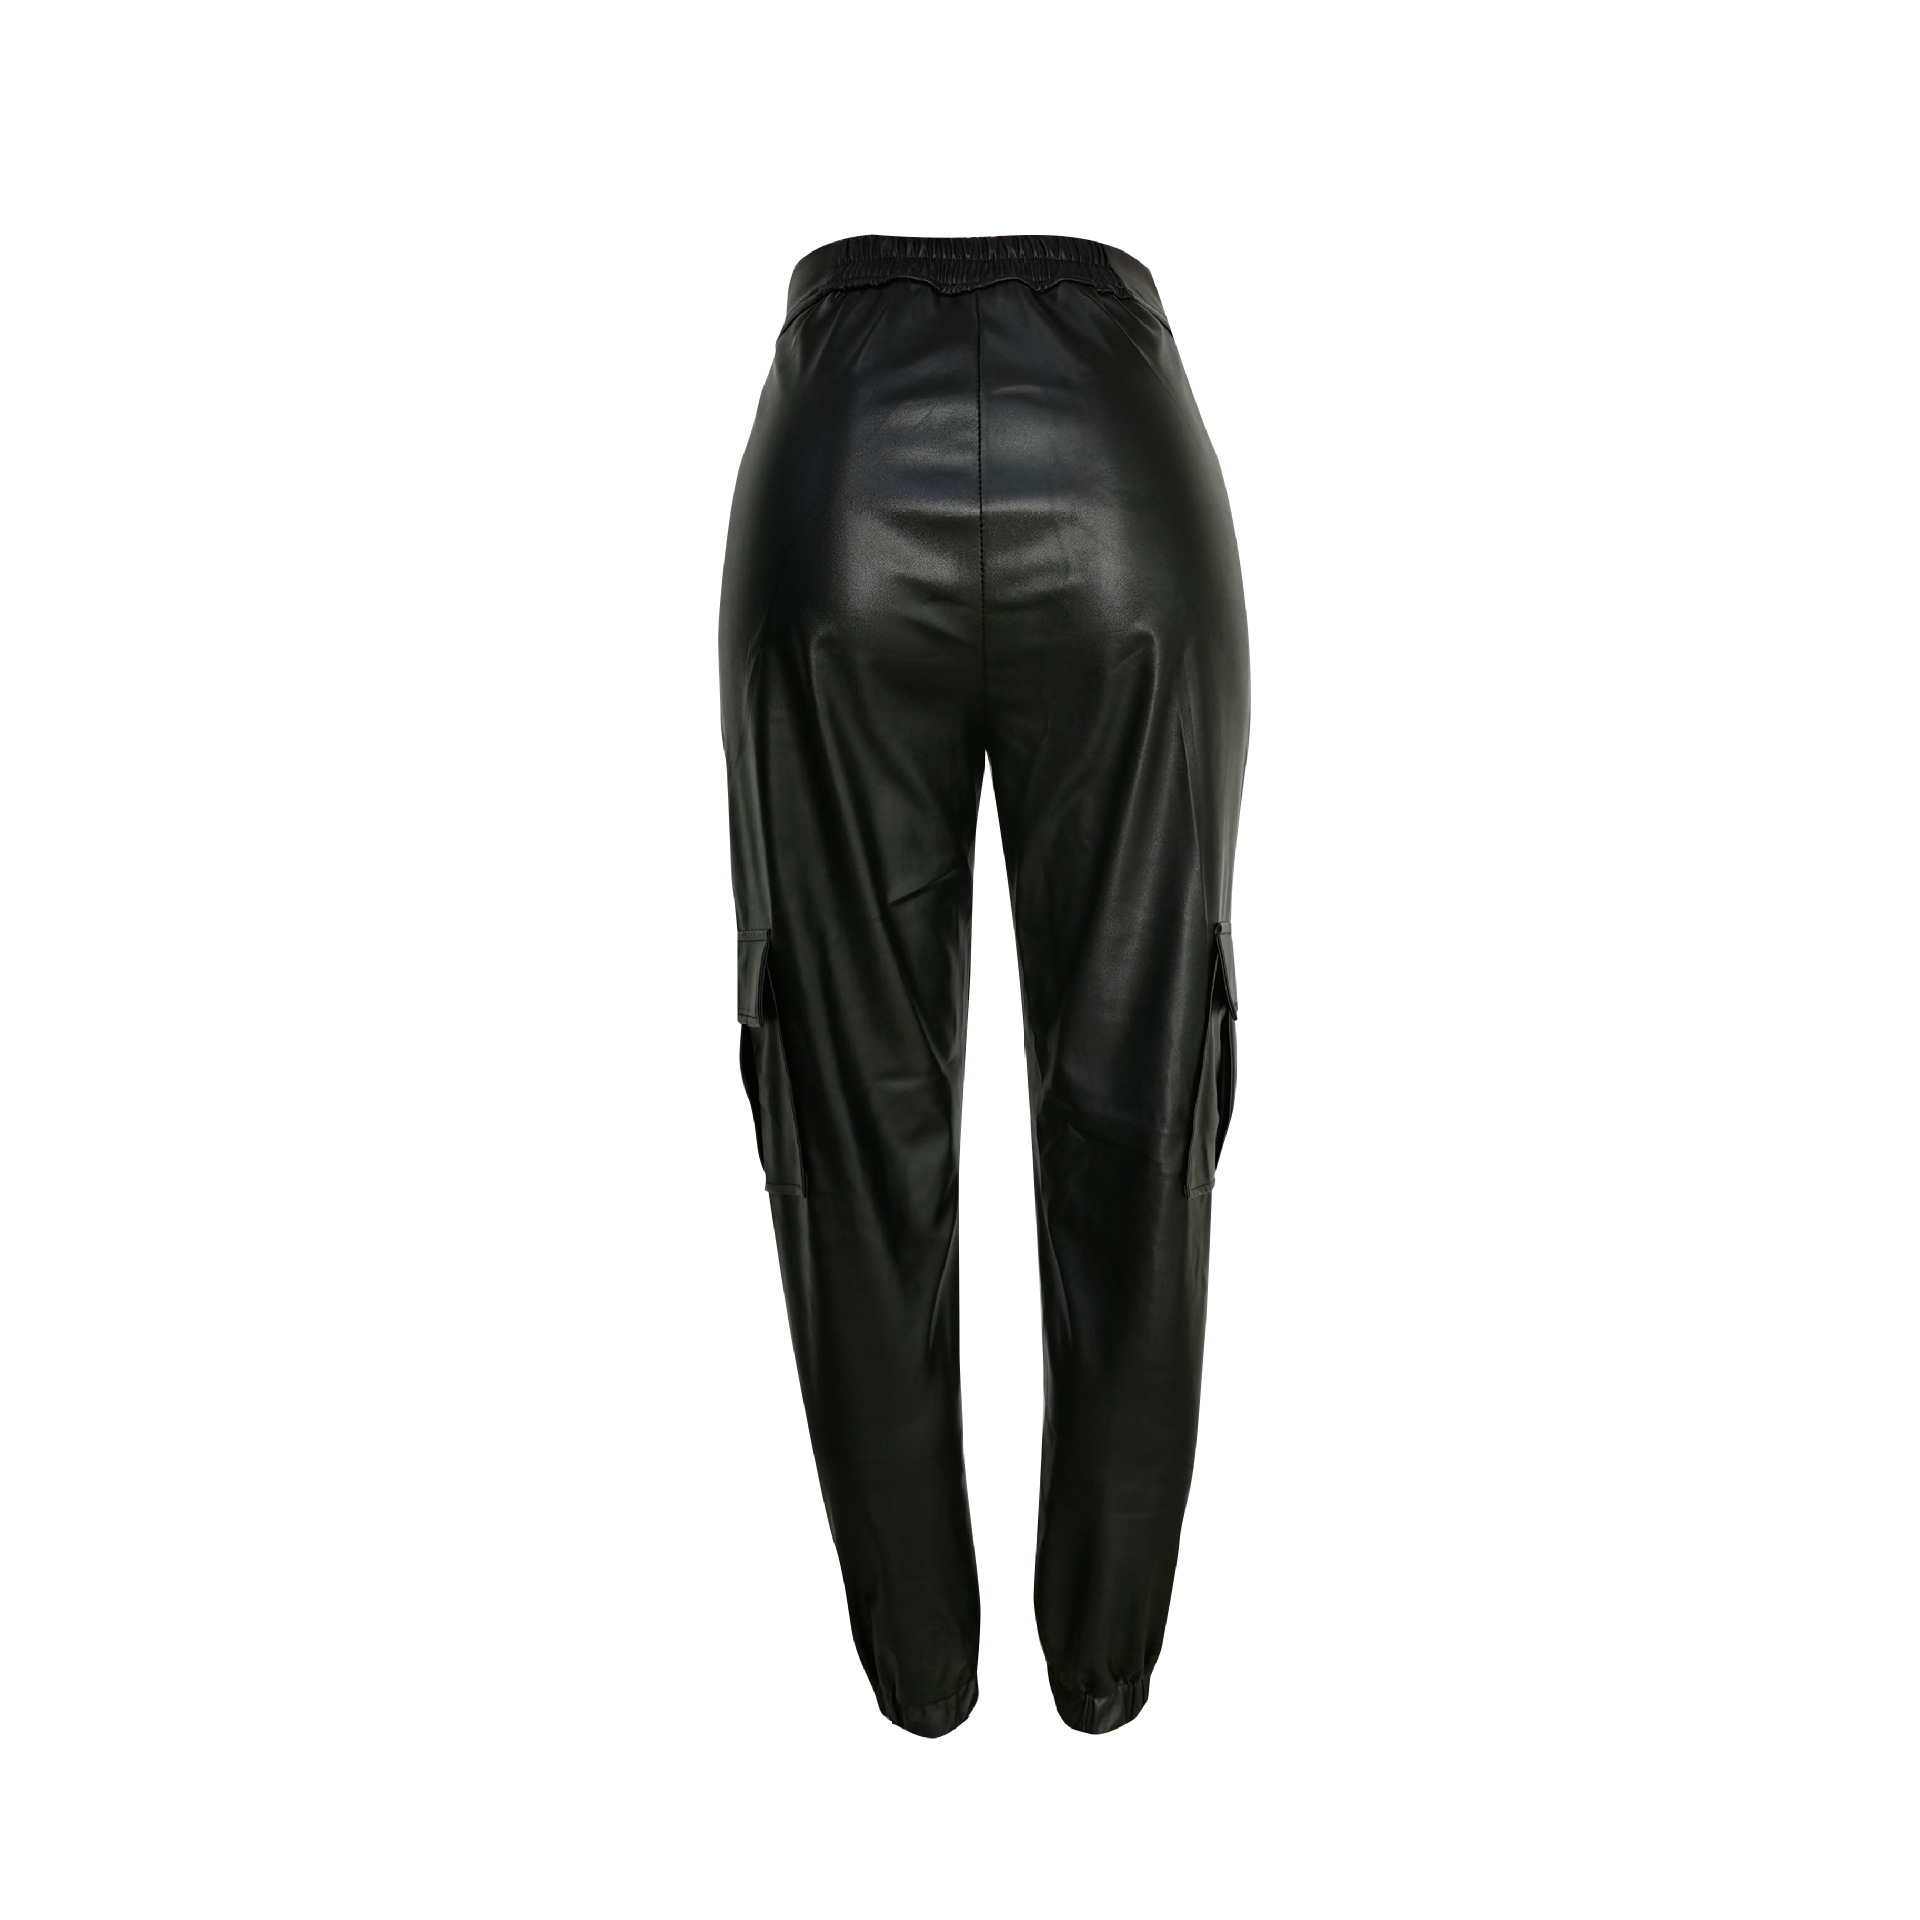 US$ 7.92 - Fashionable Multi Pocket casual pants - www.keke-lover.com